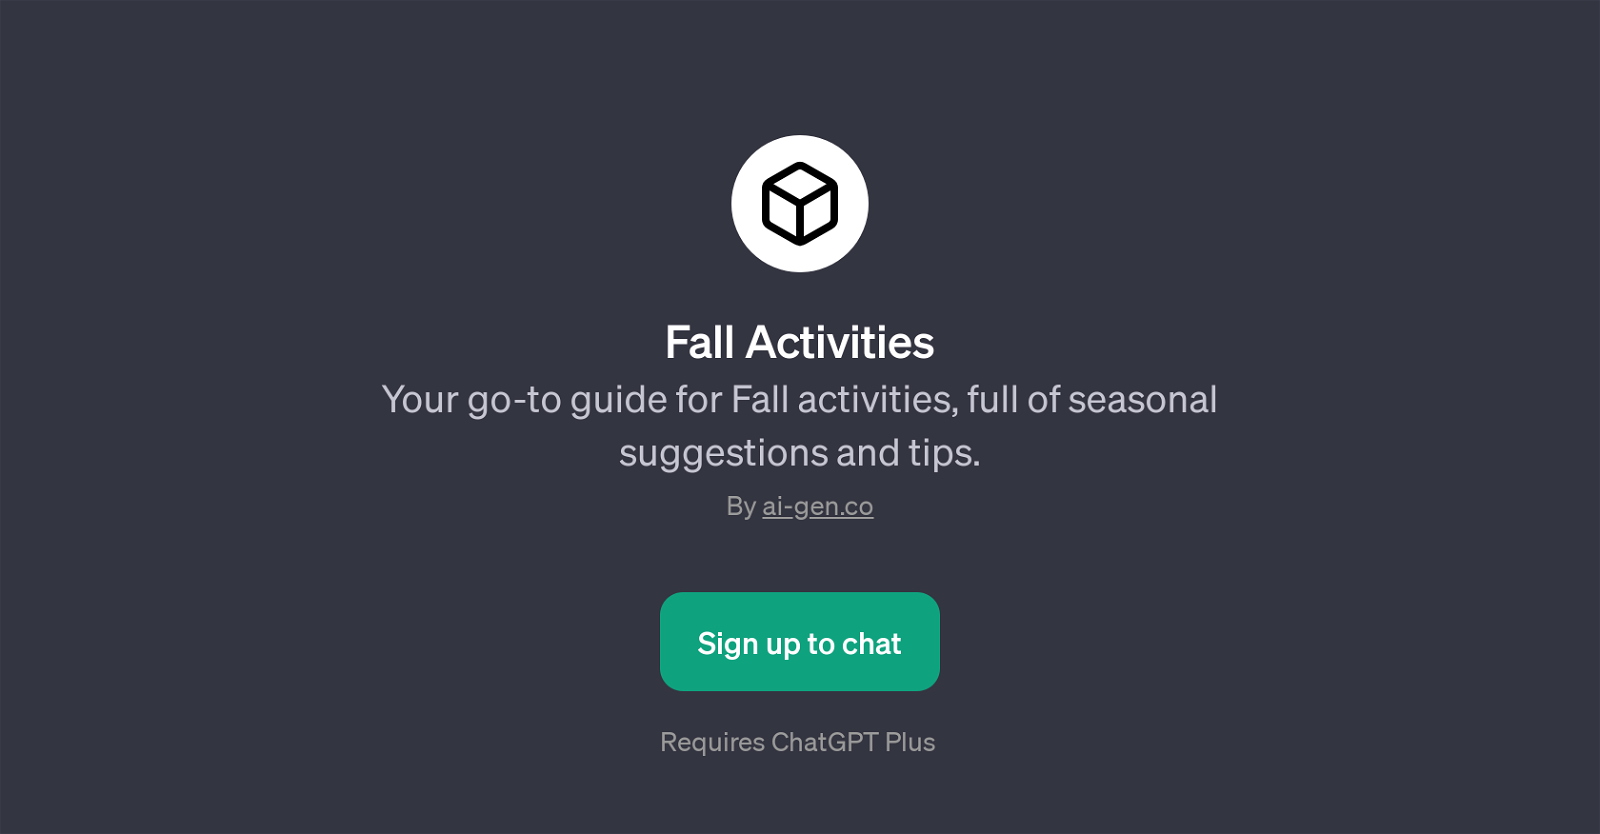 Fall Activities website